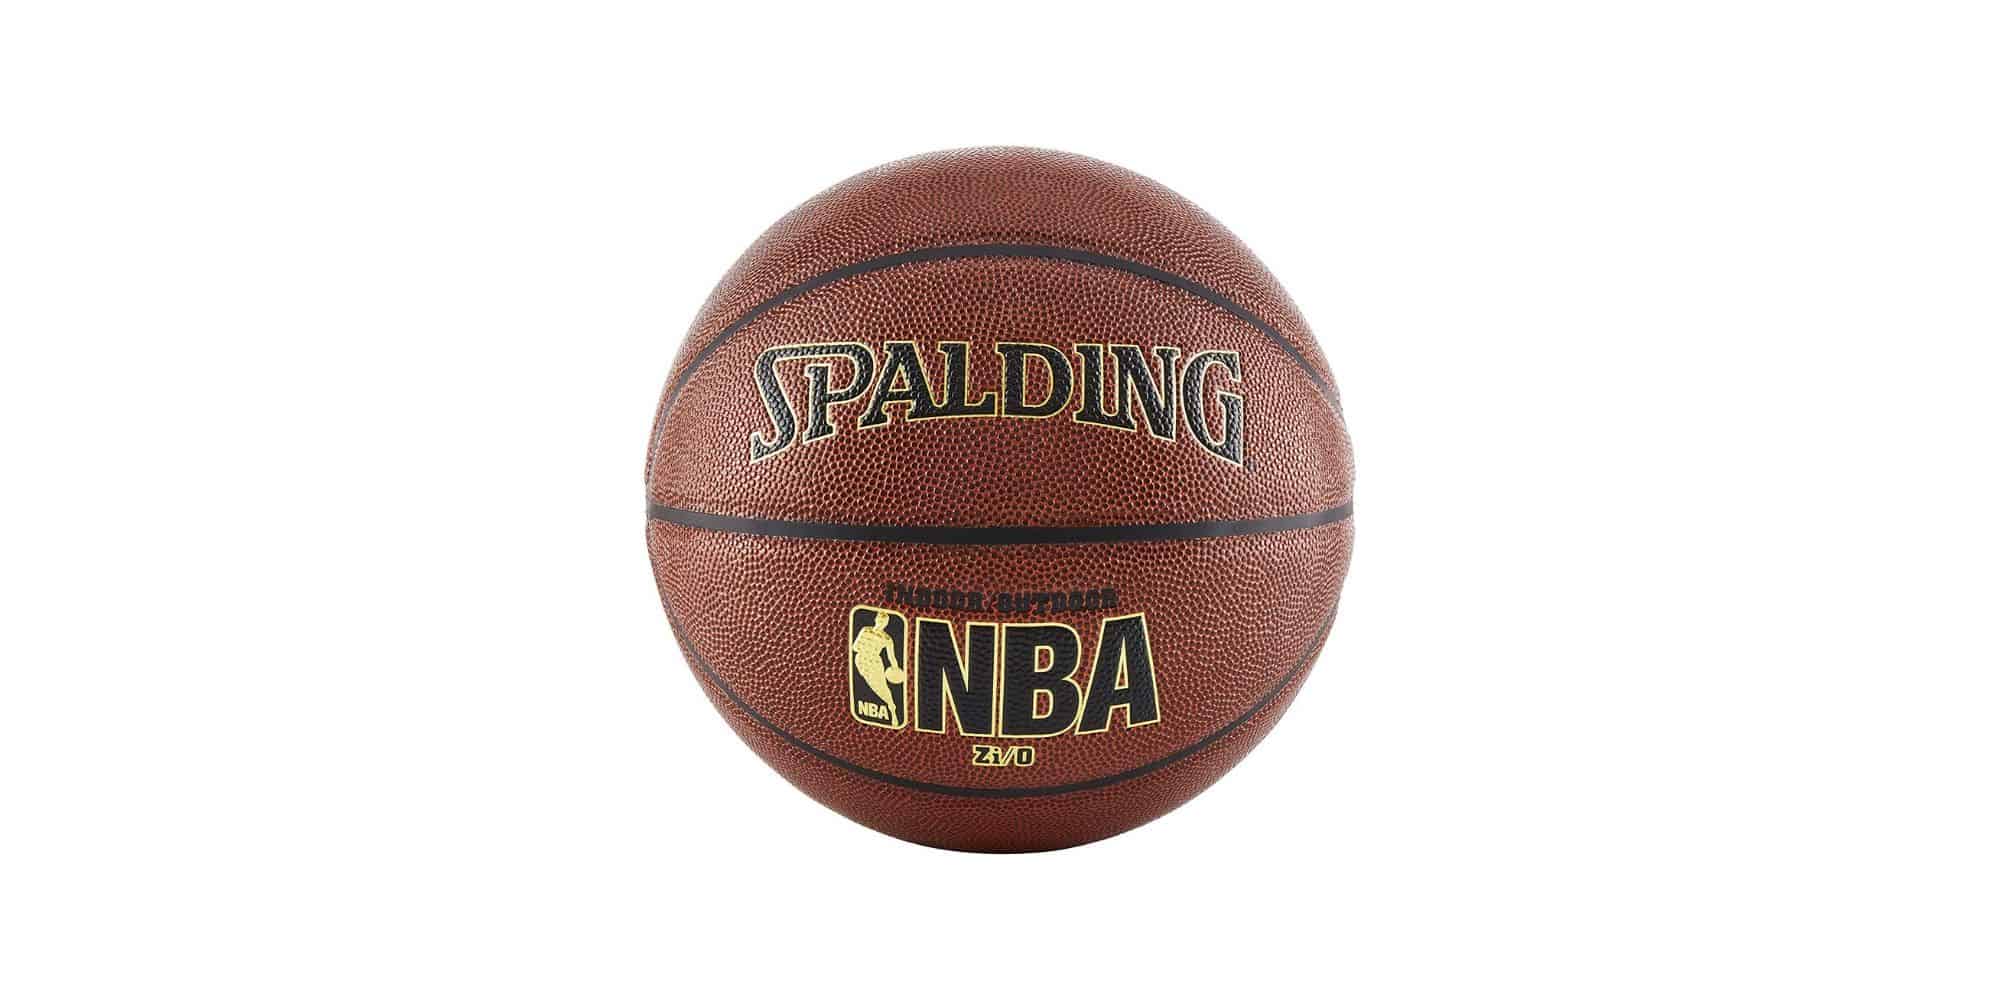 Spalding Zi/O Basketball Review